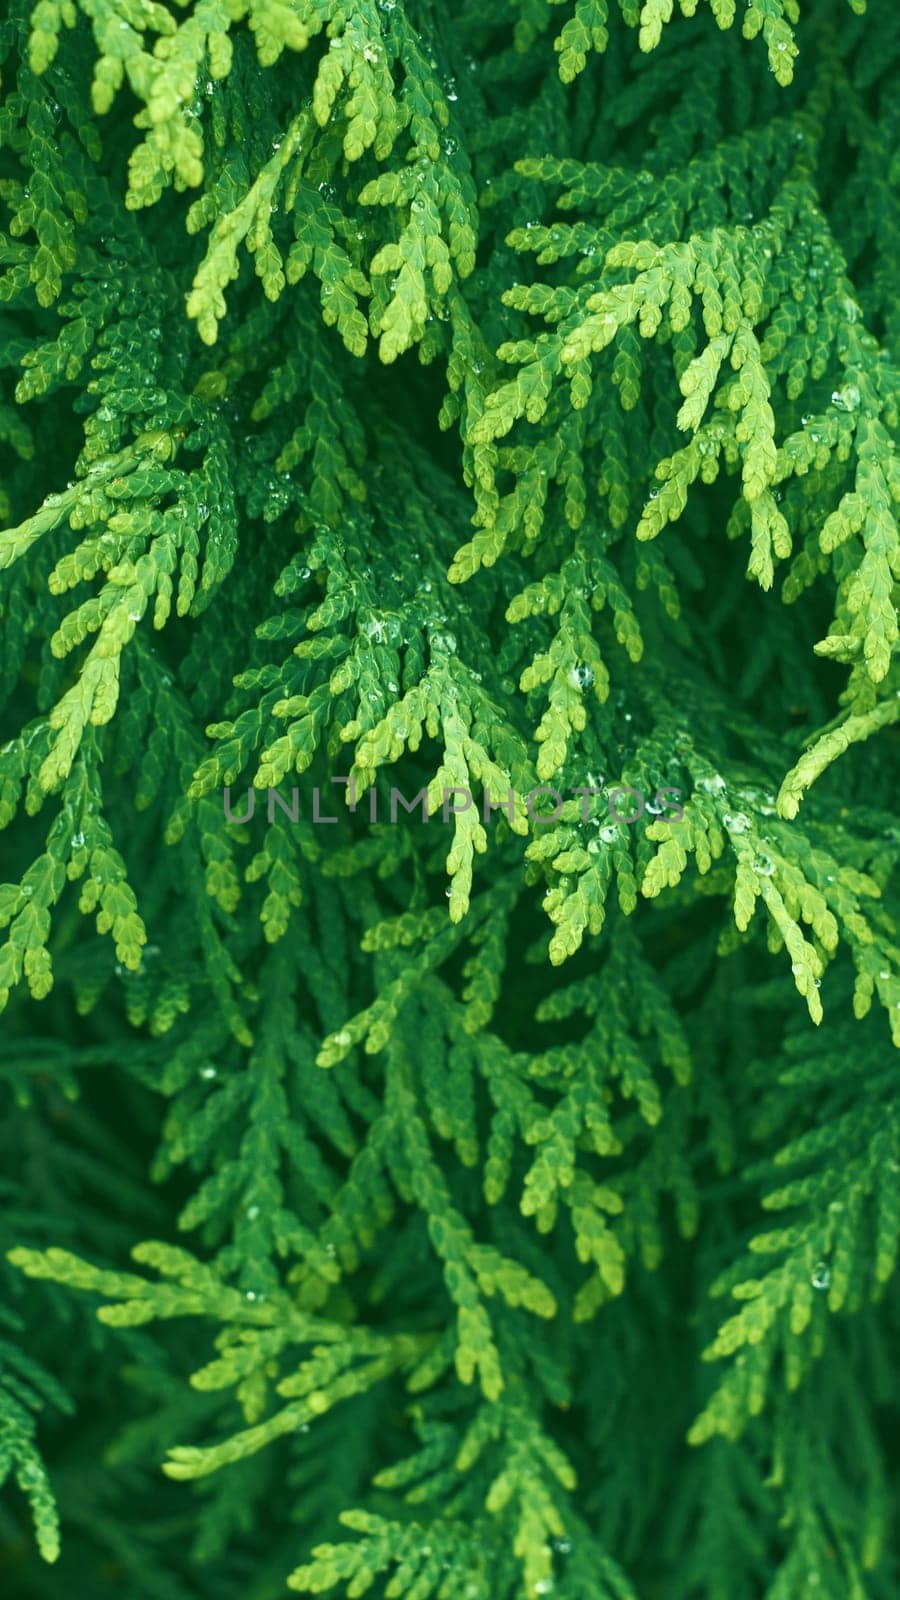 Western thuja green twig. Marsh cedar plant texture background. Thuja occidentalis. High quality photo